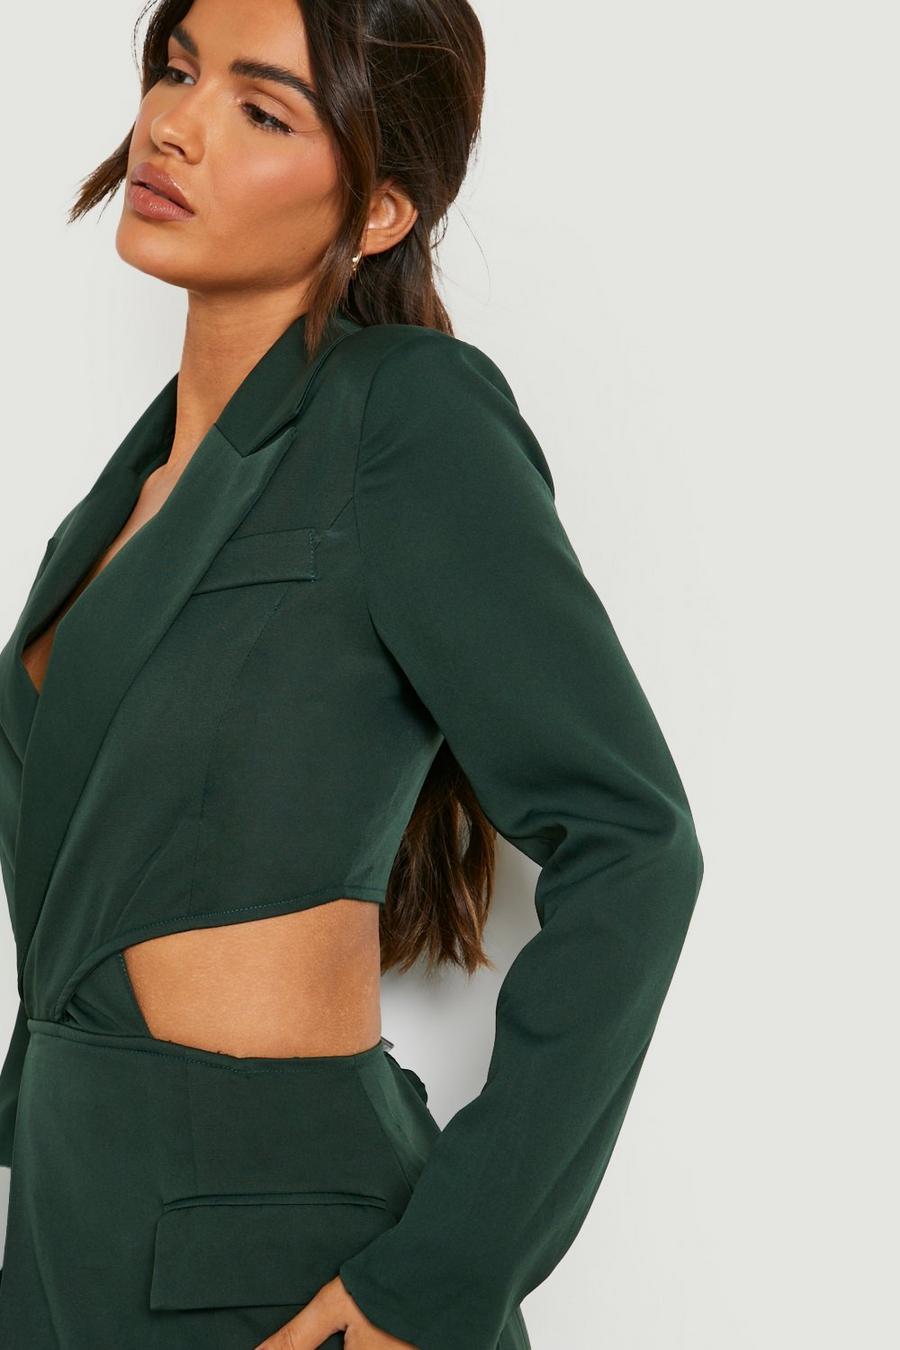 Emerald Twist Cut Out Pocket Detail Blazer Dress